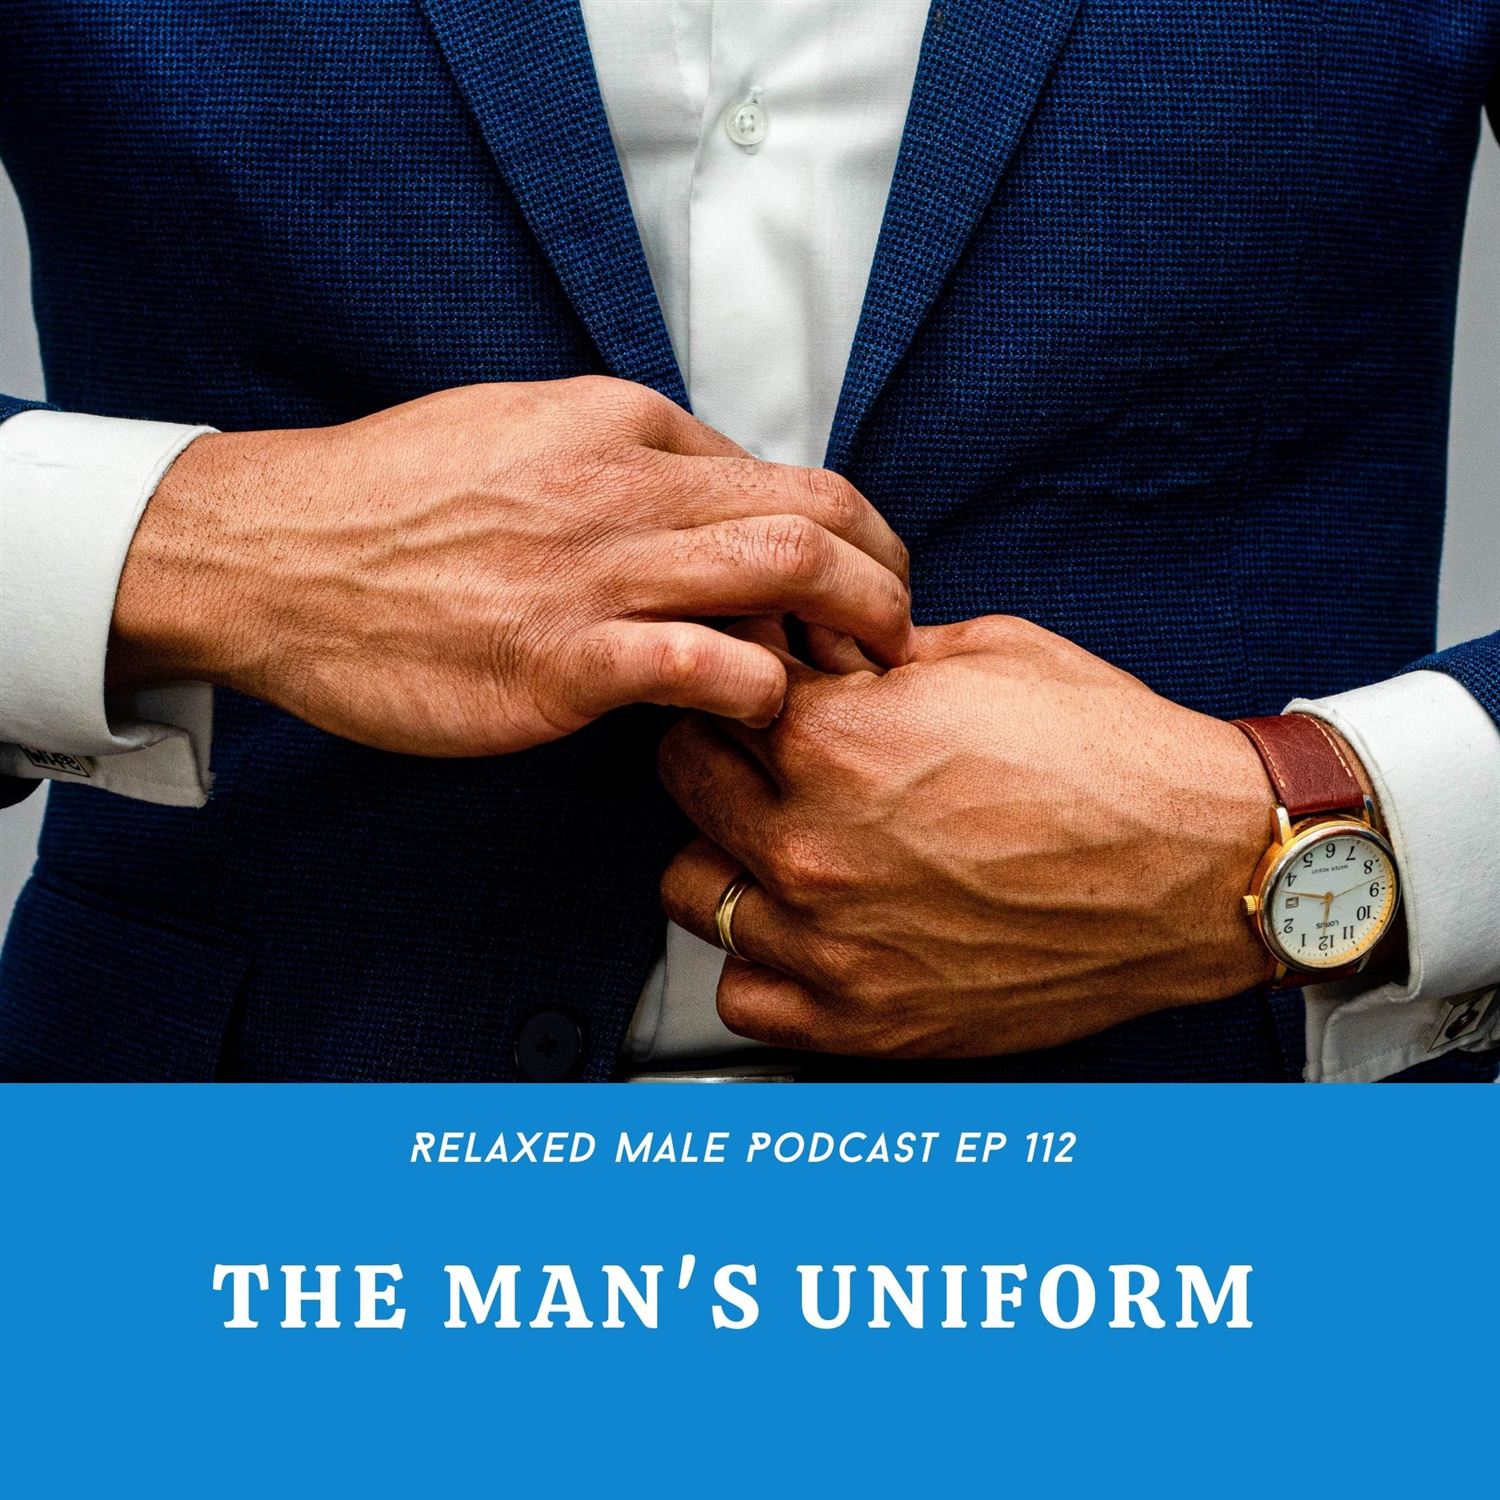 The Man's Uniform